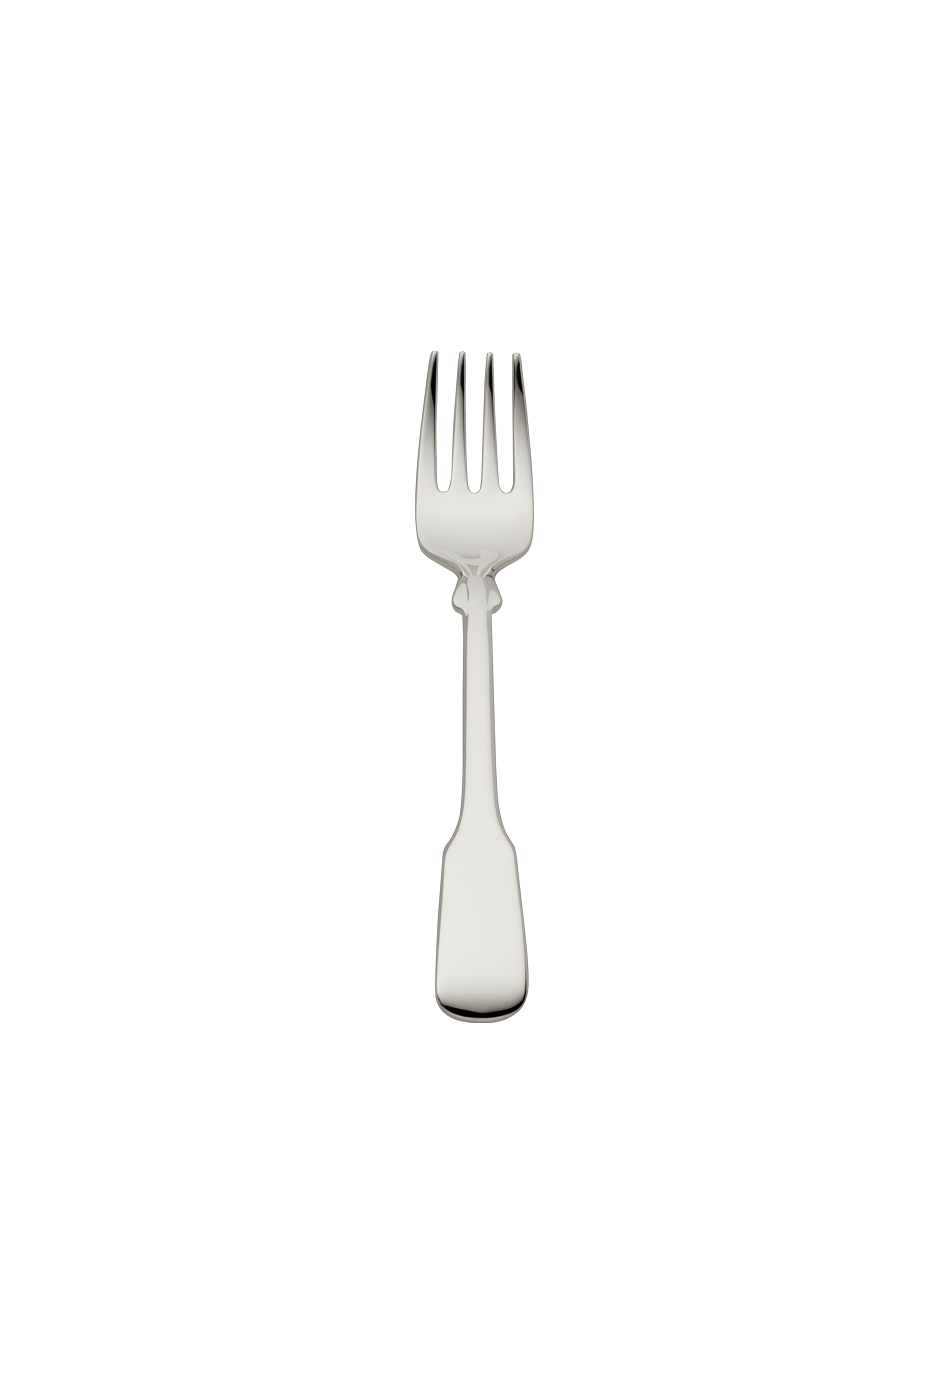 Alt-Spaten Children's Fork (150g massive silverplated)